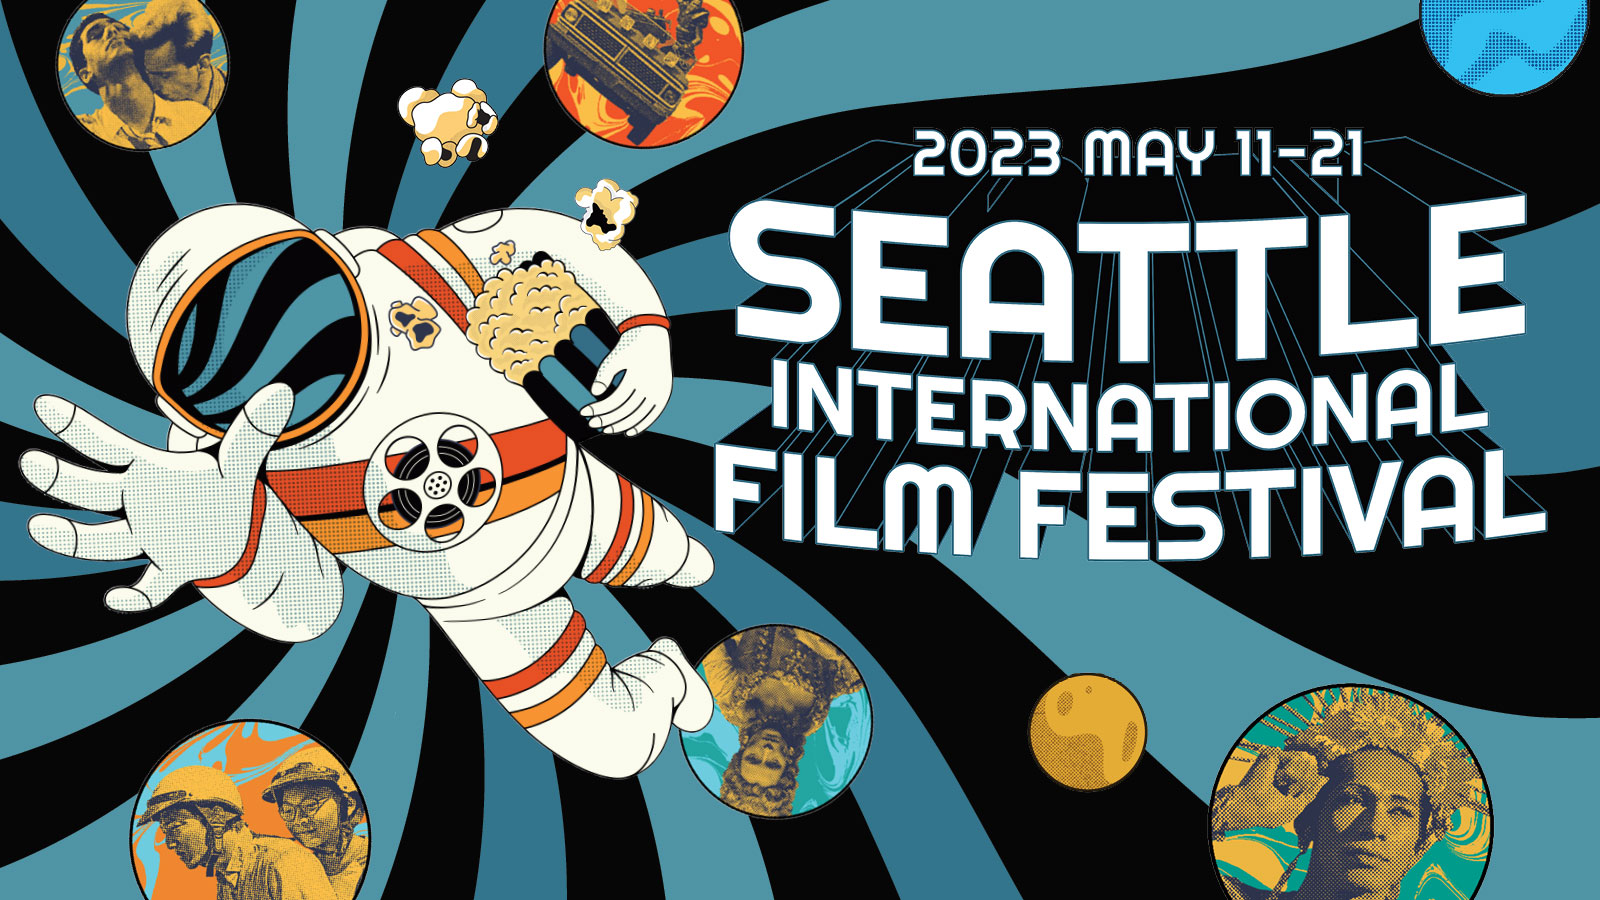 Seattle International Film Festival